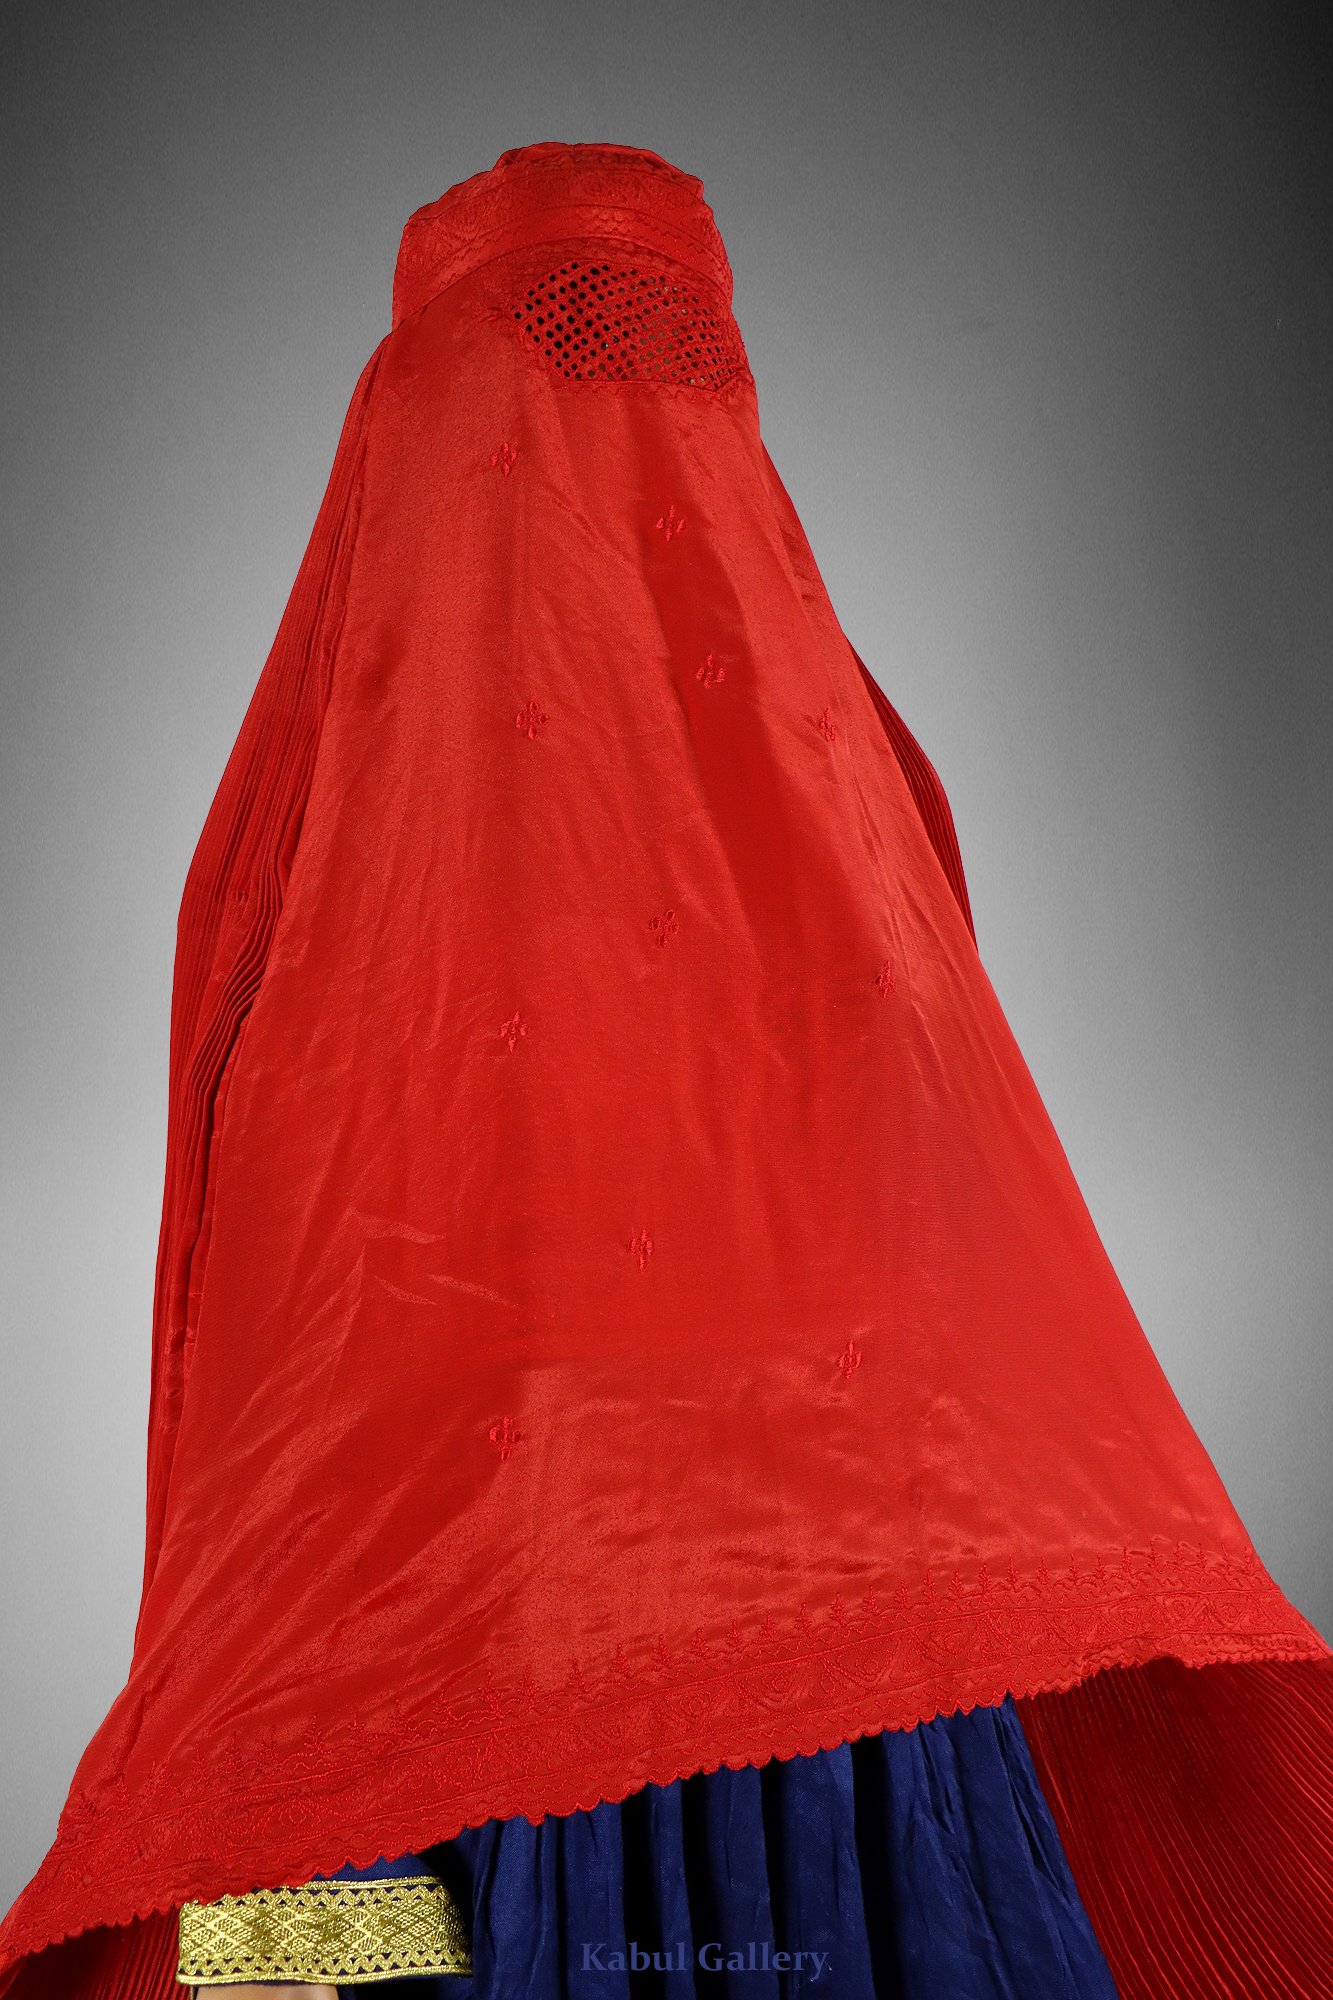 Original Afghanische Frauen schleier kopftuch Burka Burqua umhang afghan burqa abaya Niqab Kleid hijab Tschador afghanistan Pakistan ROT